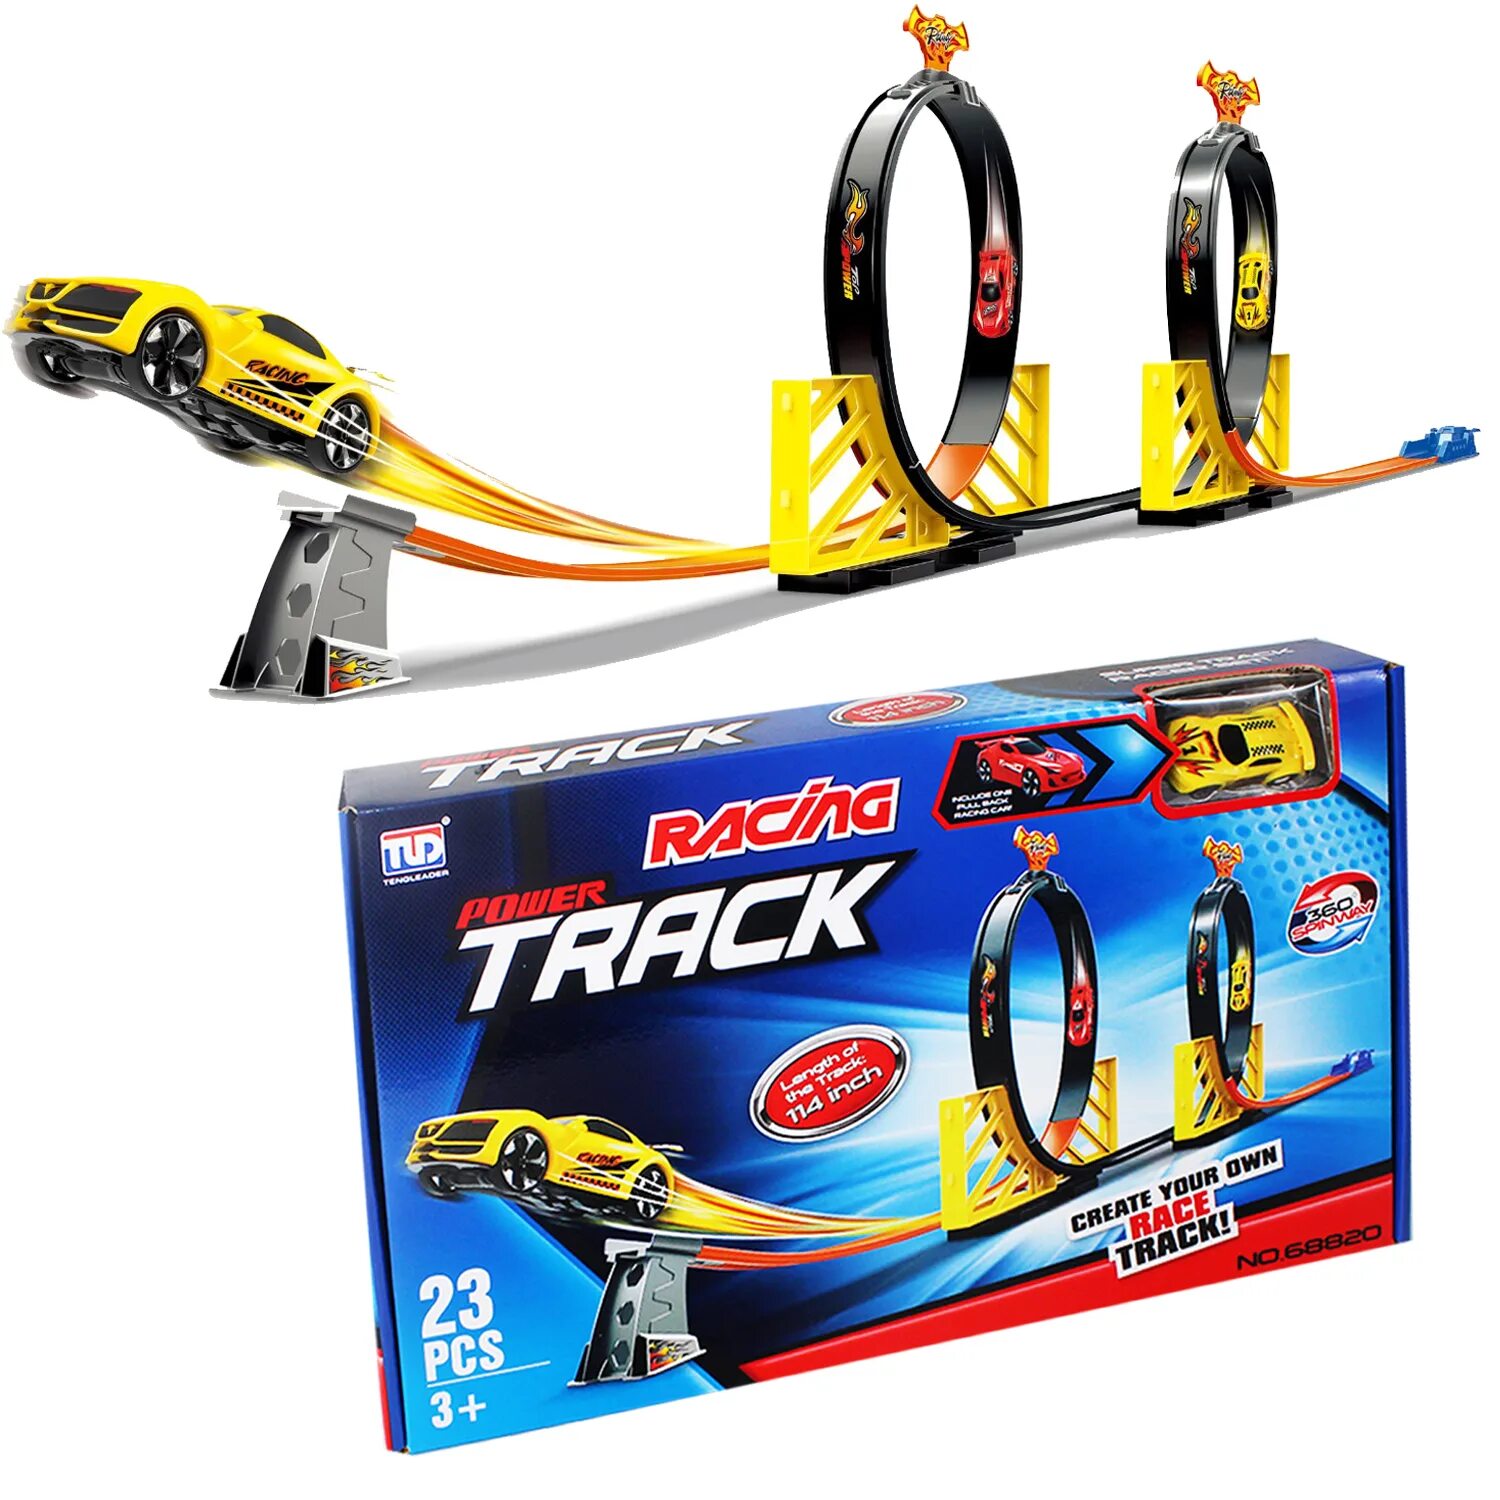 Power track Racing. Lighting Pull back car автотрек мертвая. G-track автомобиль. Race track Looper желтый грузовик. 23 tracks